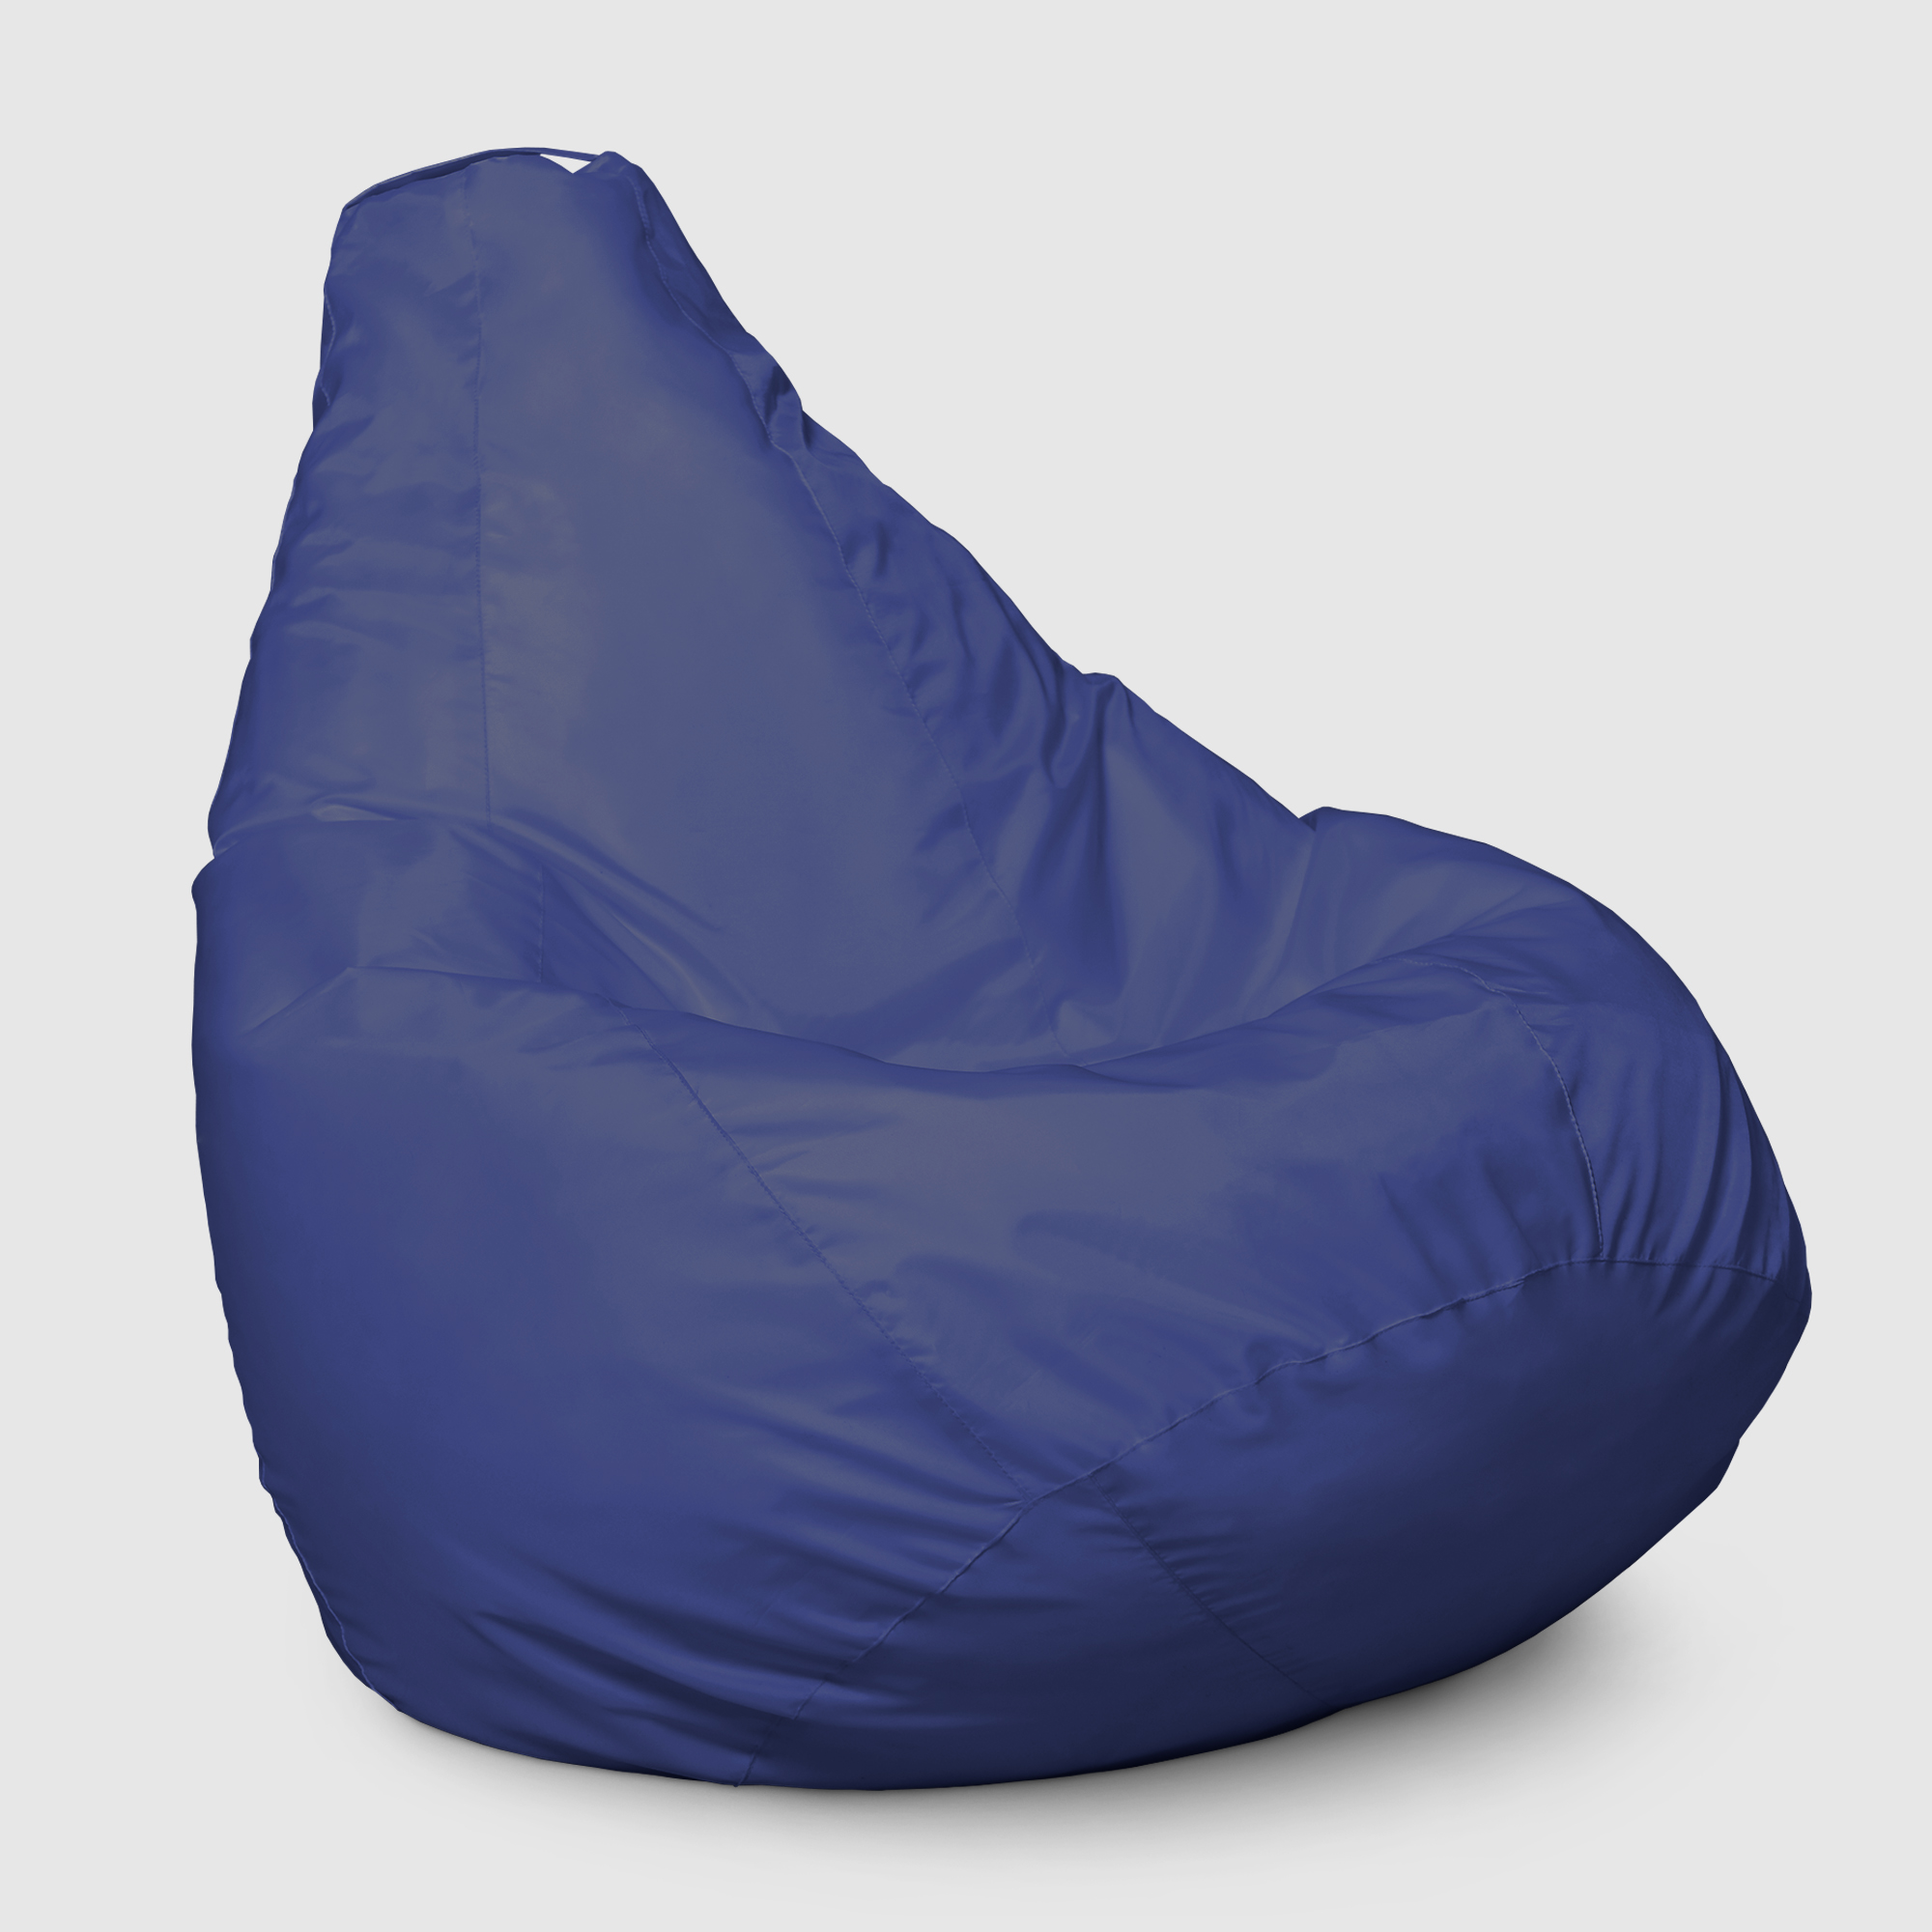 Кресло мешок Dreambag Меган xl темно-синее 85х85х125 см кресло мешок dreambag меган xl белое 85х85х125см